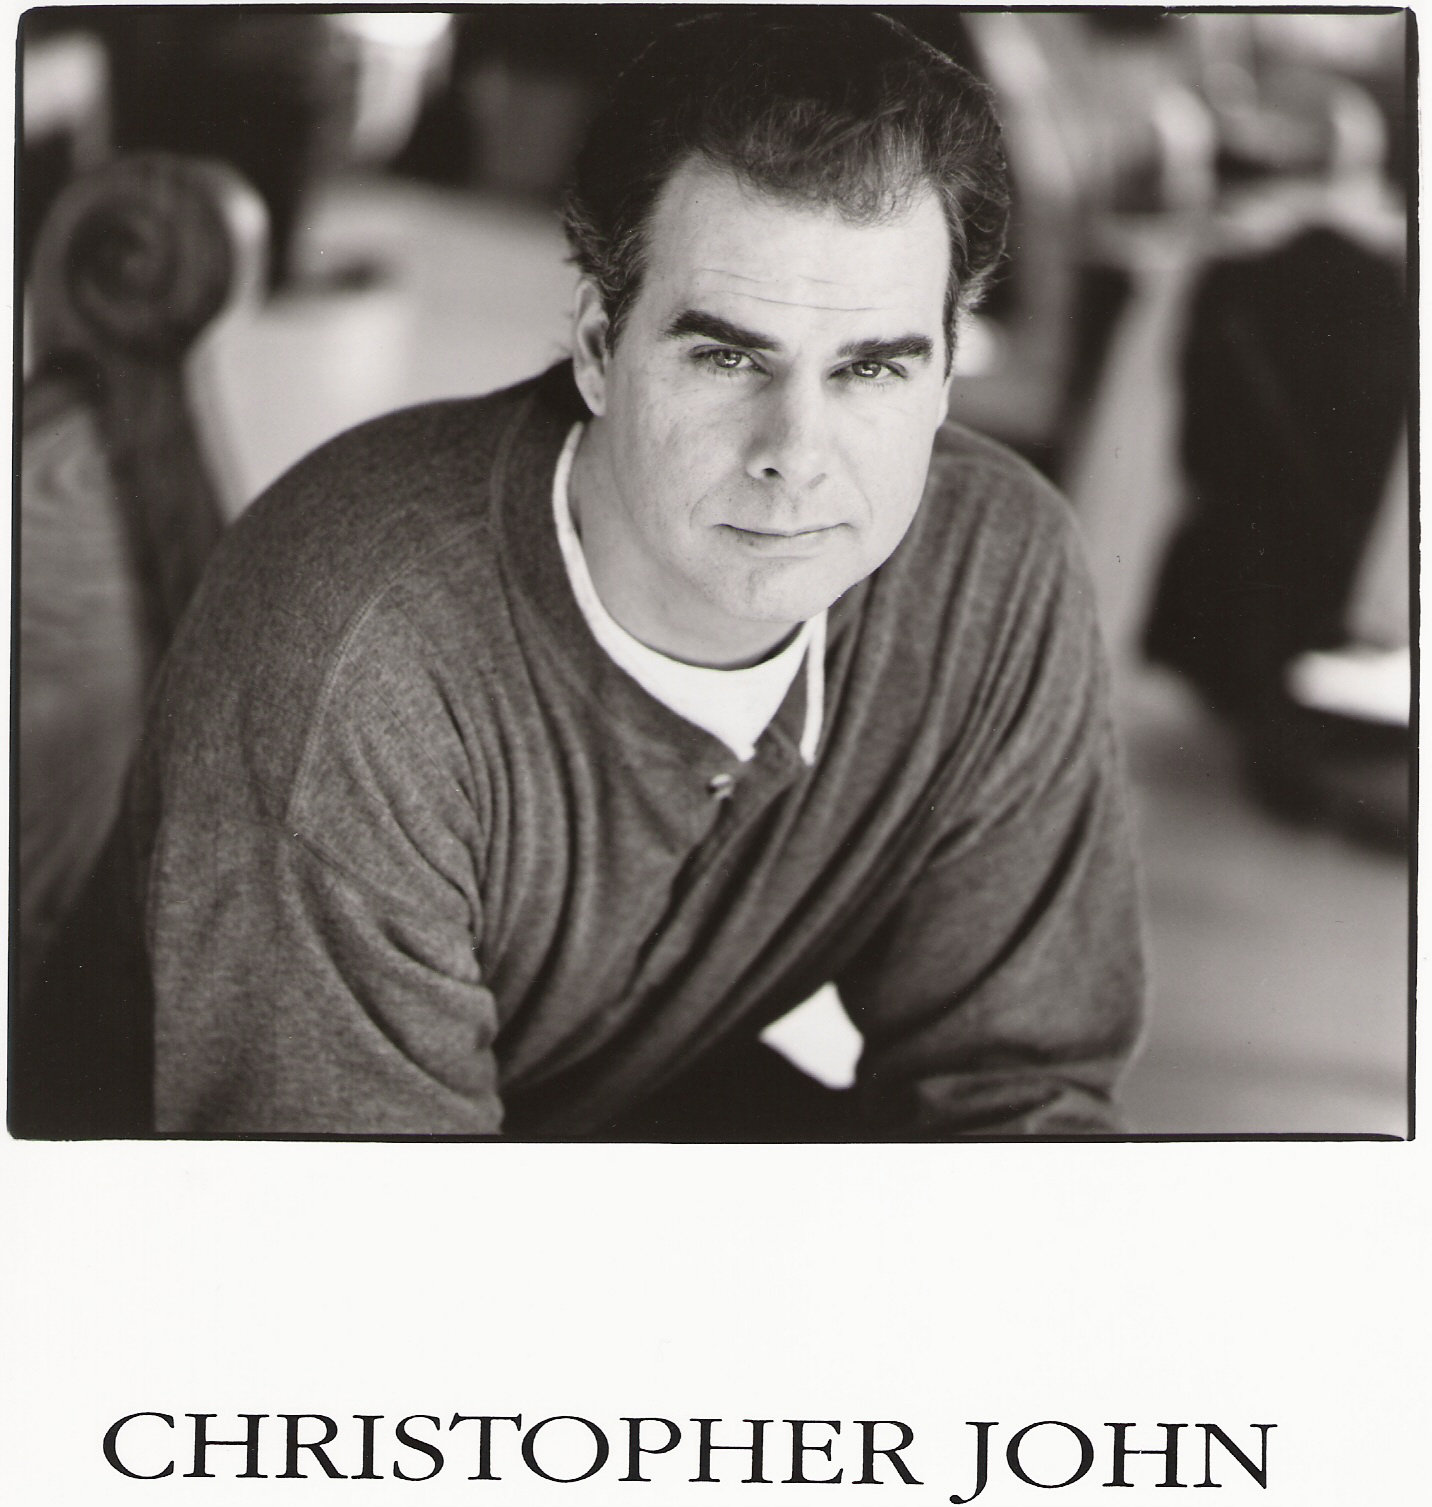 Chris John - Writer/Director